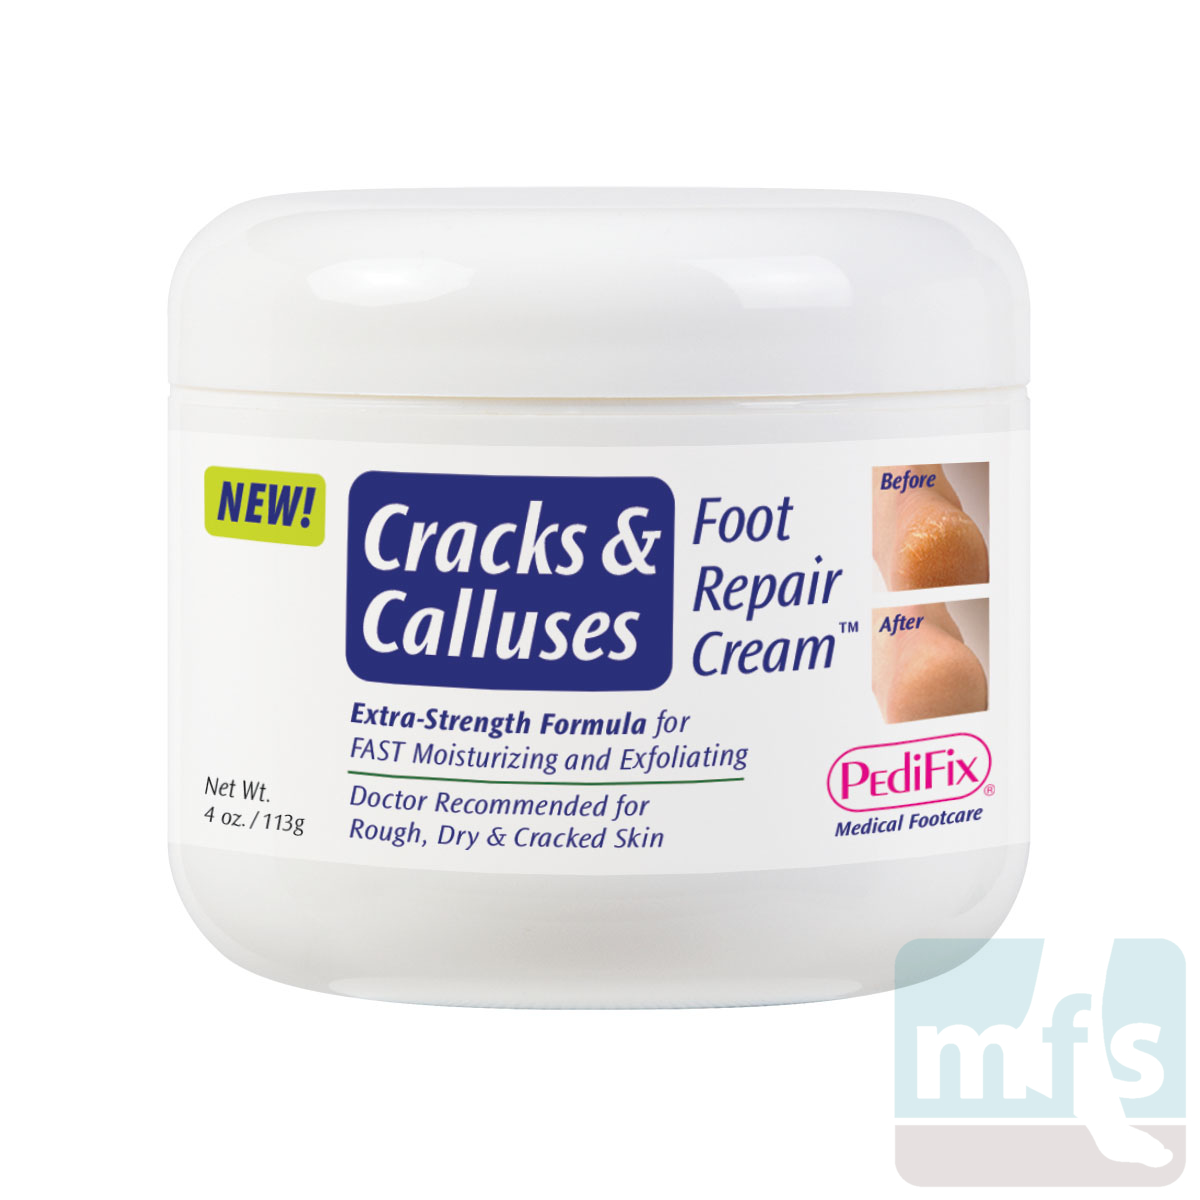 https://www.myfootshop.com/images/thumbs/w_1_0003926_cracks-calluses-foot-repair-cream.jpeg